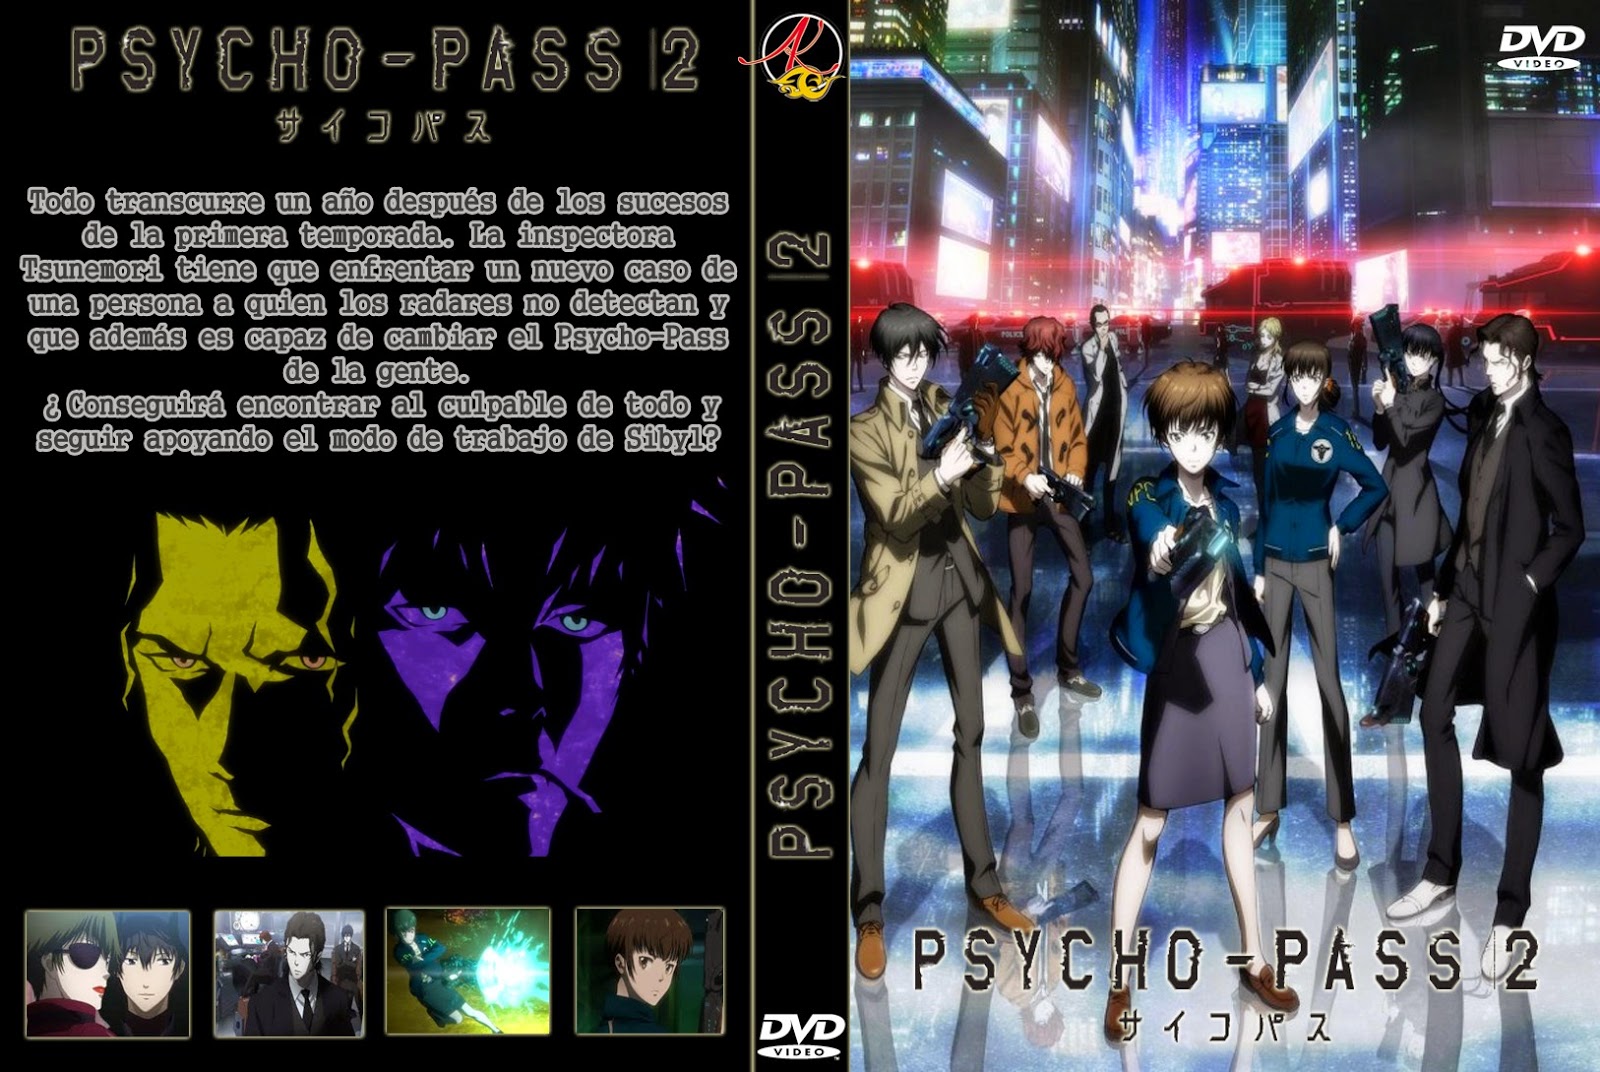 Portadas Anime DVD: Psycho Pass 2 (Portada DVD)